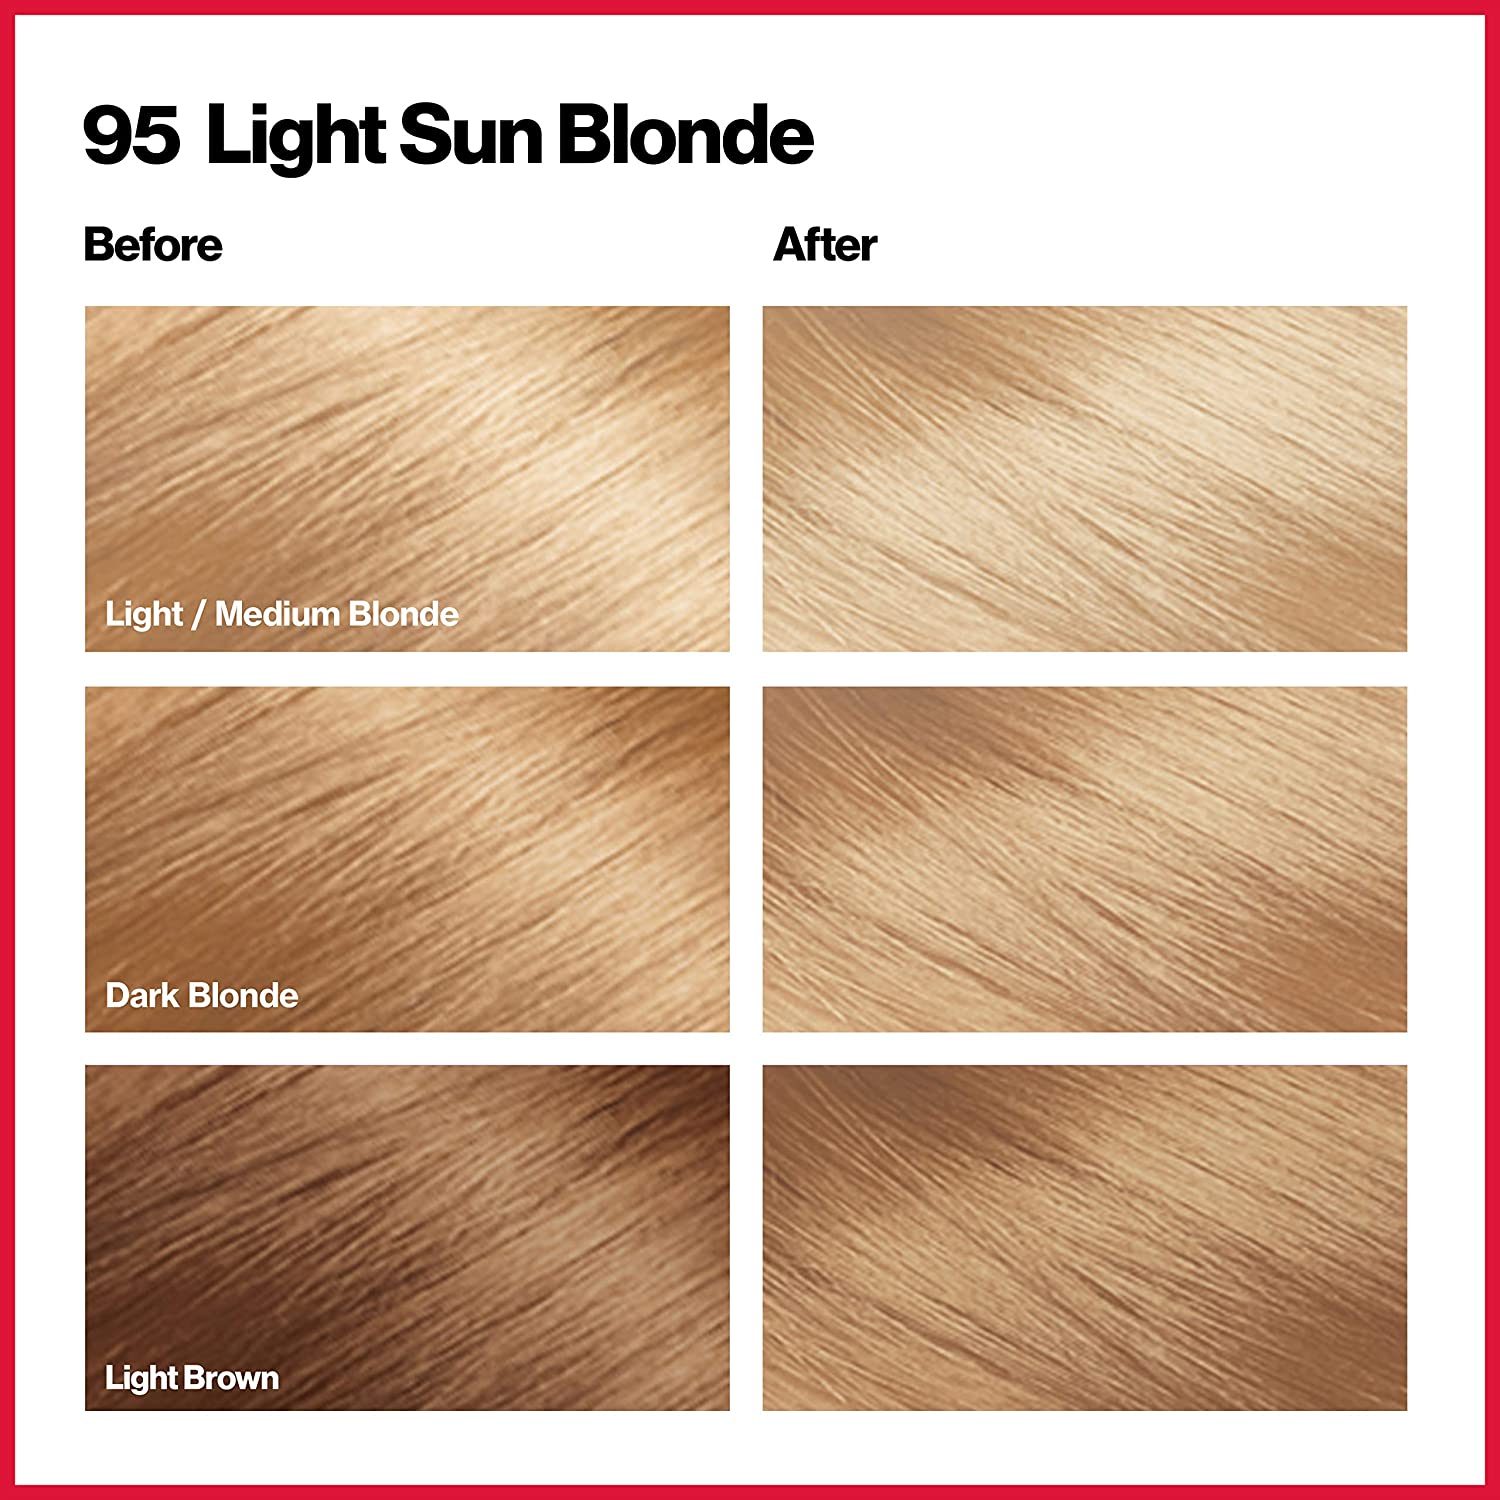 Light Sun Blonde